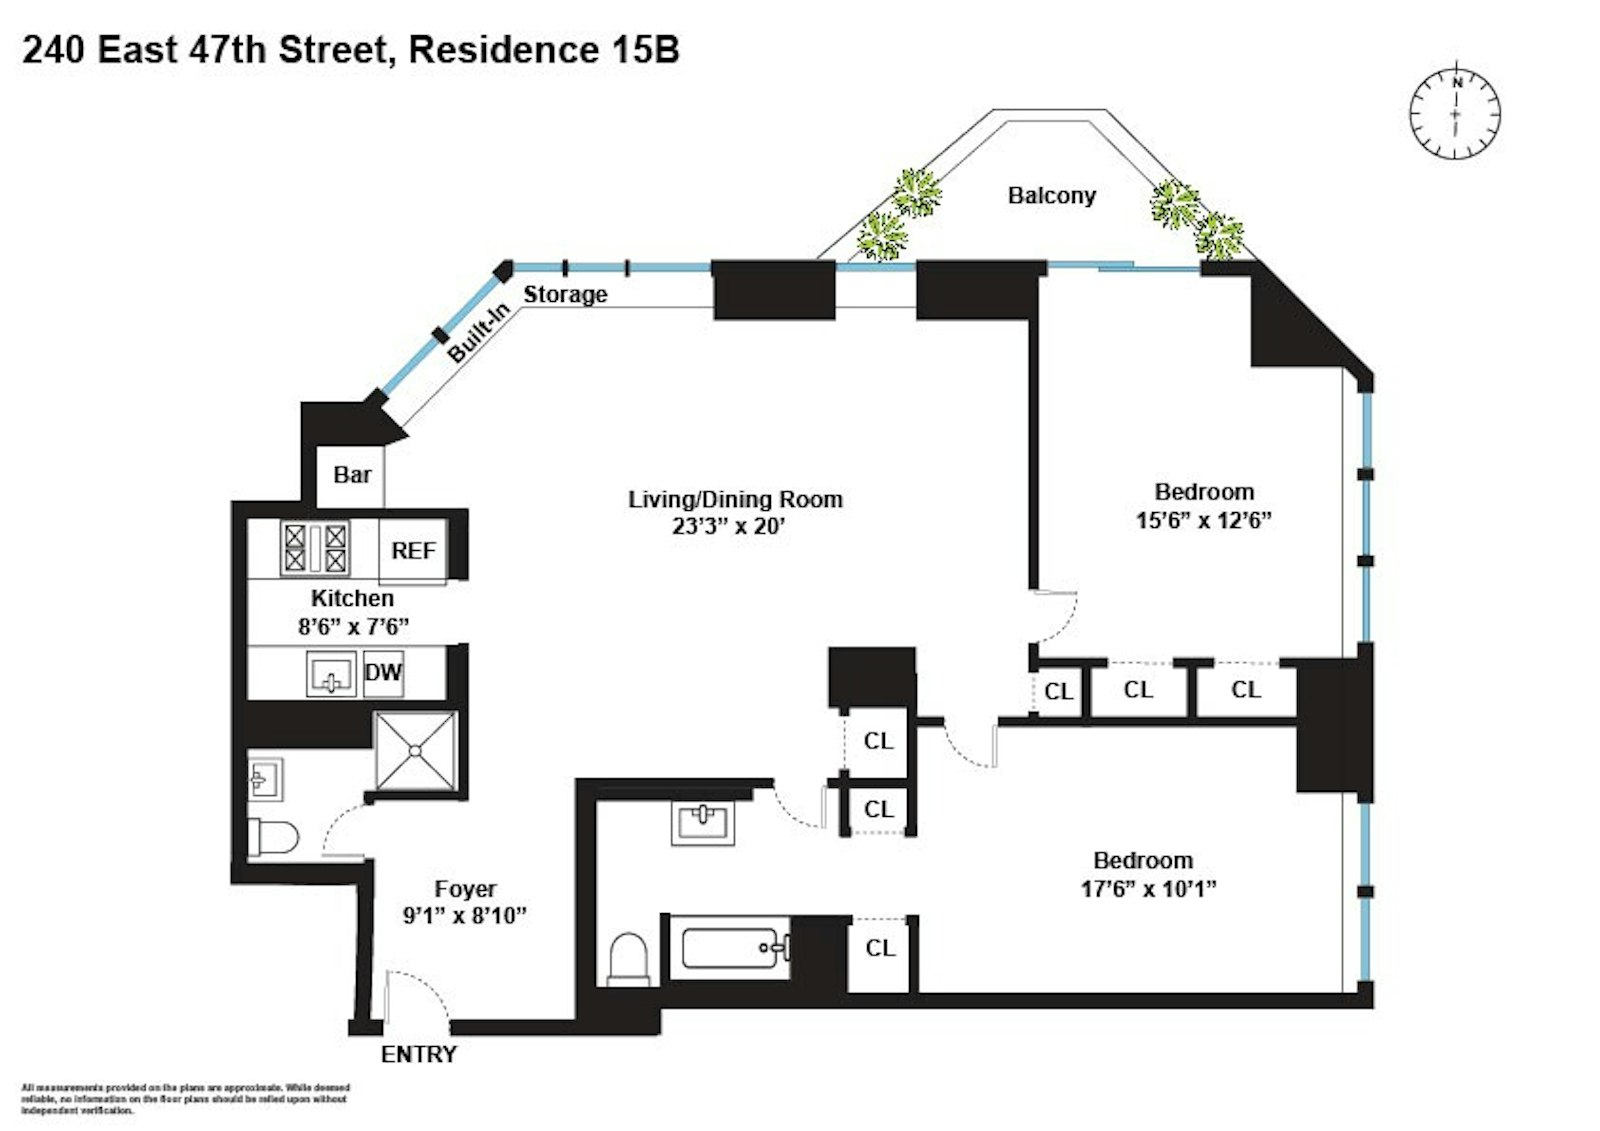 Floorplan for 240 East 47th Street, 15B